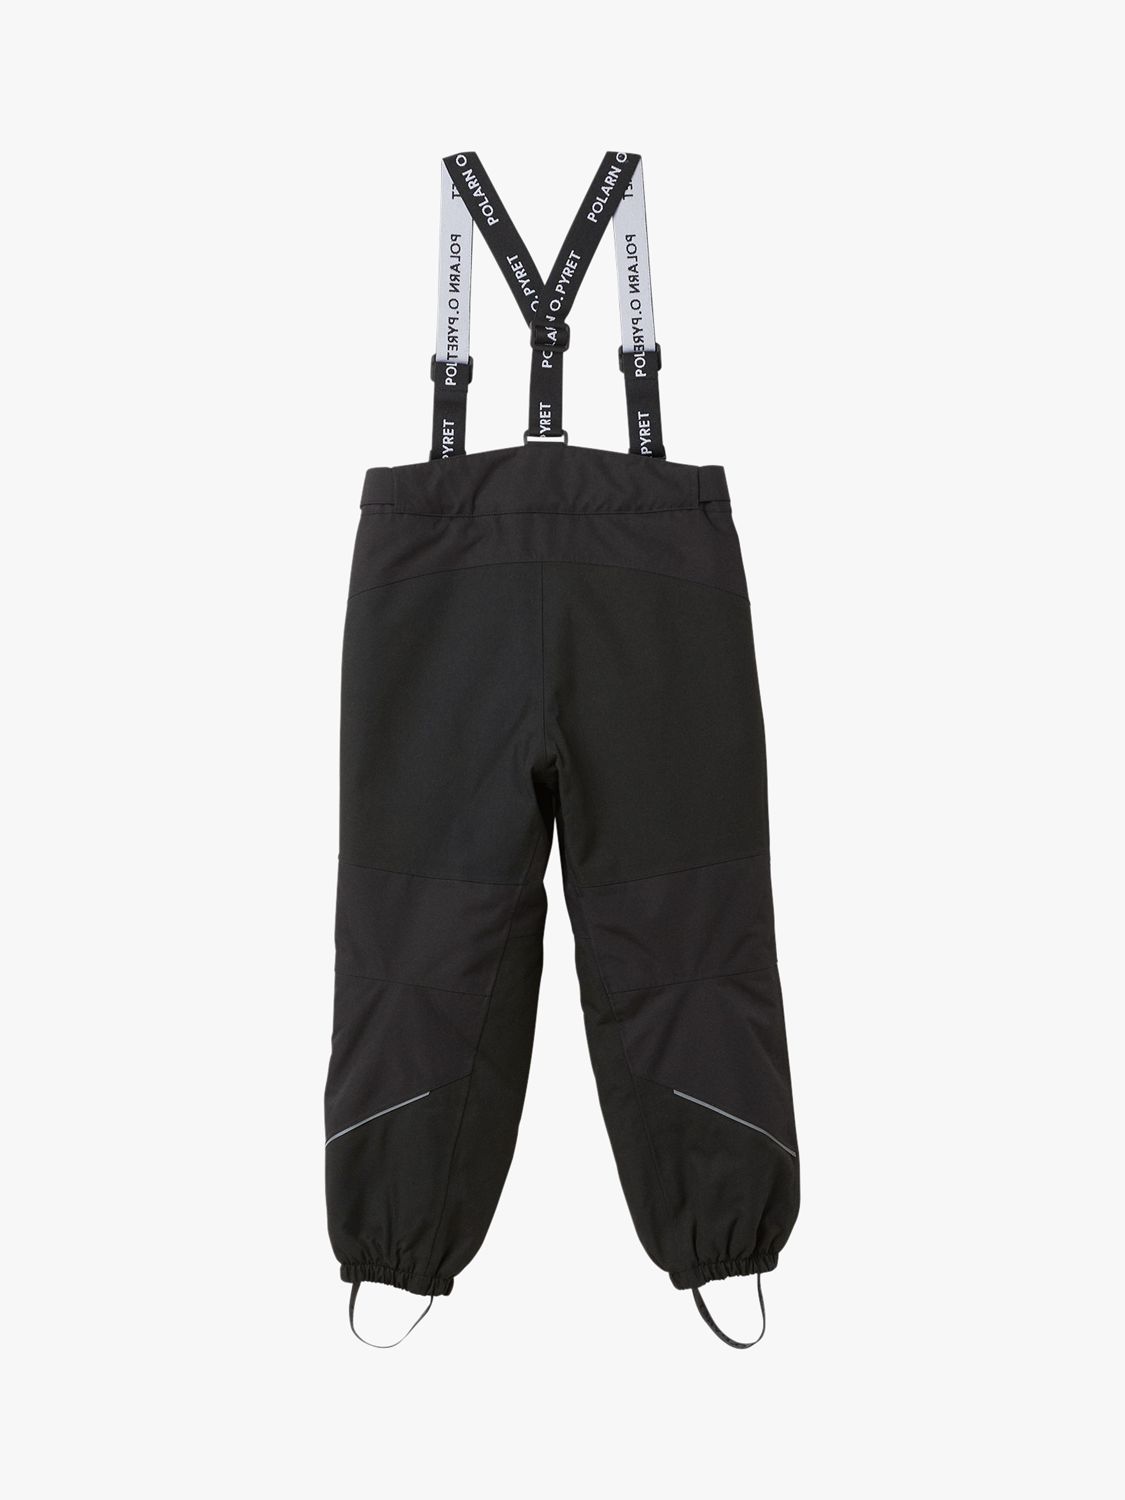 Buy Polarn O. Pyret Kids' 2-in-1 Waterproof Trousers, Black Online at johnlewis.com